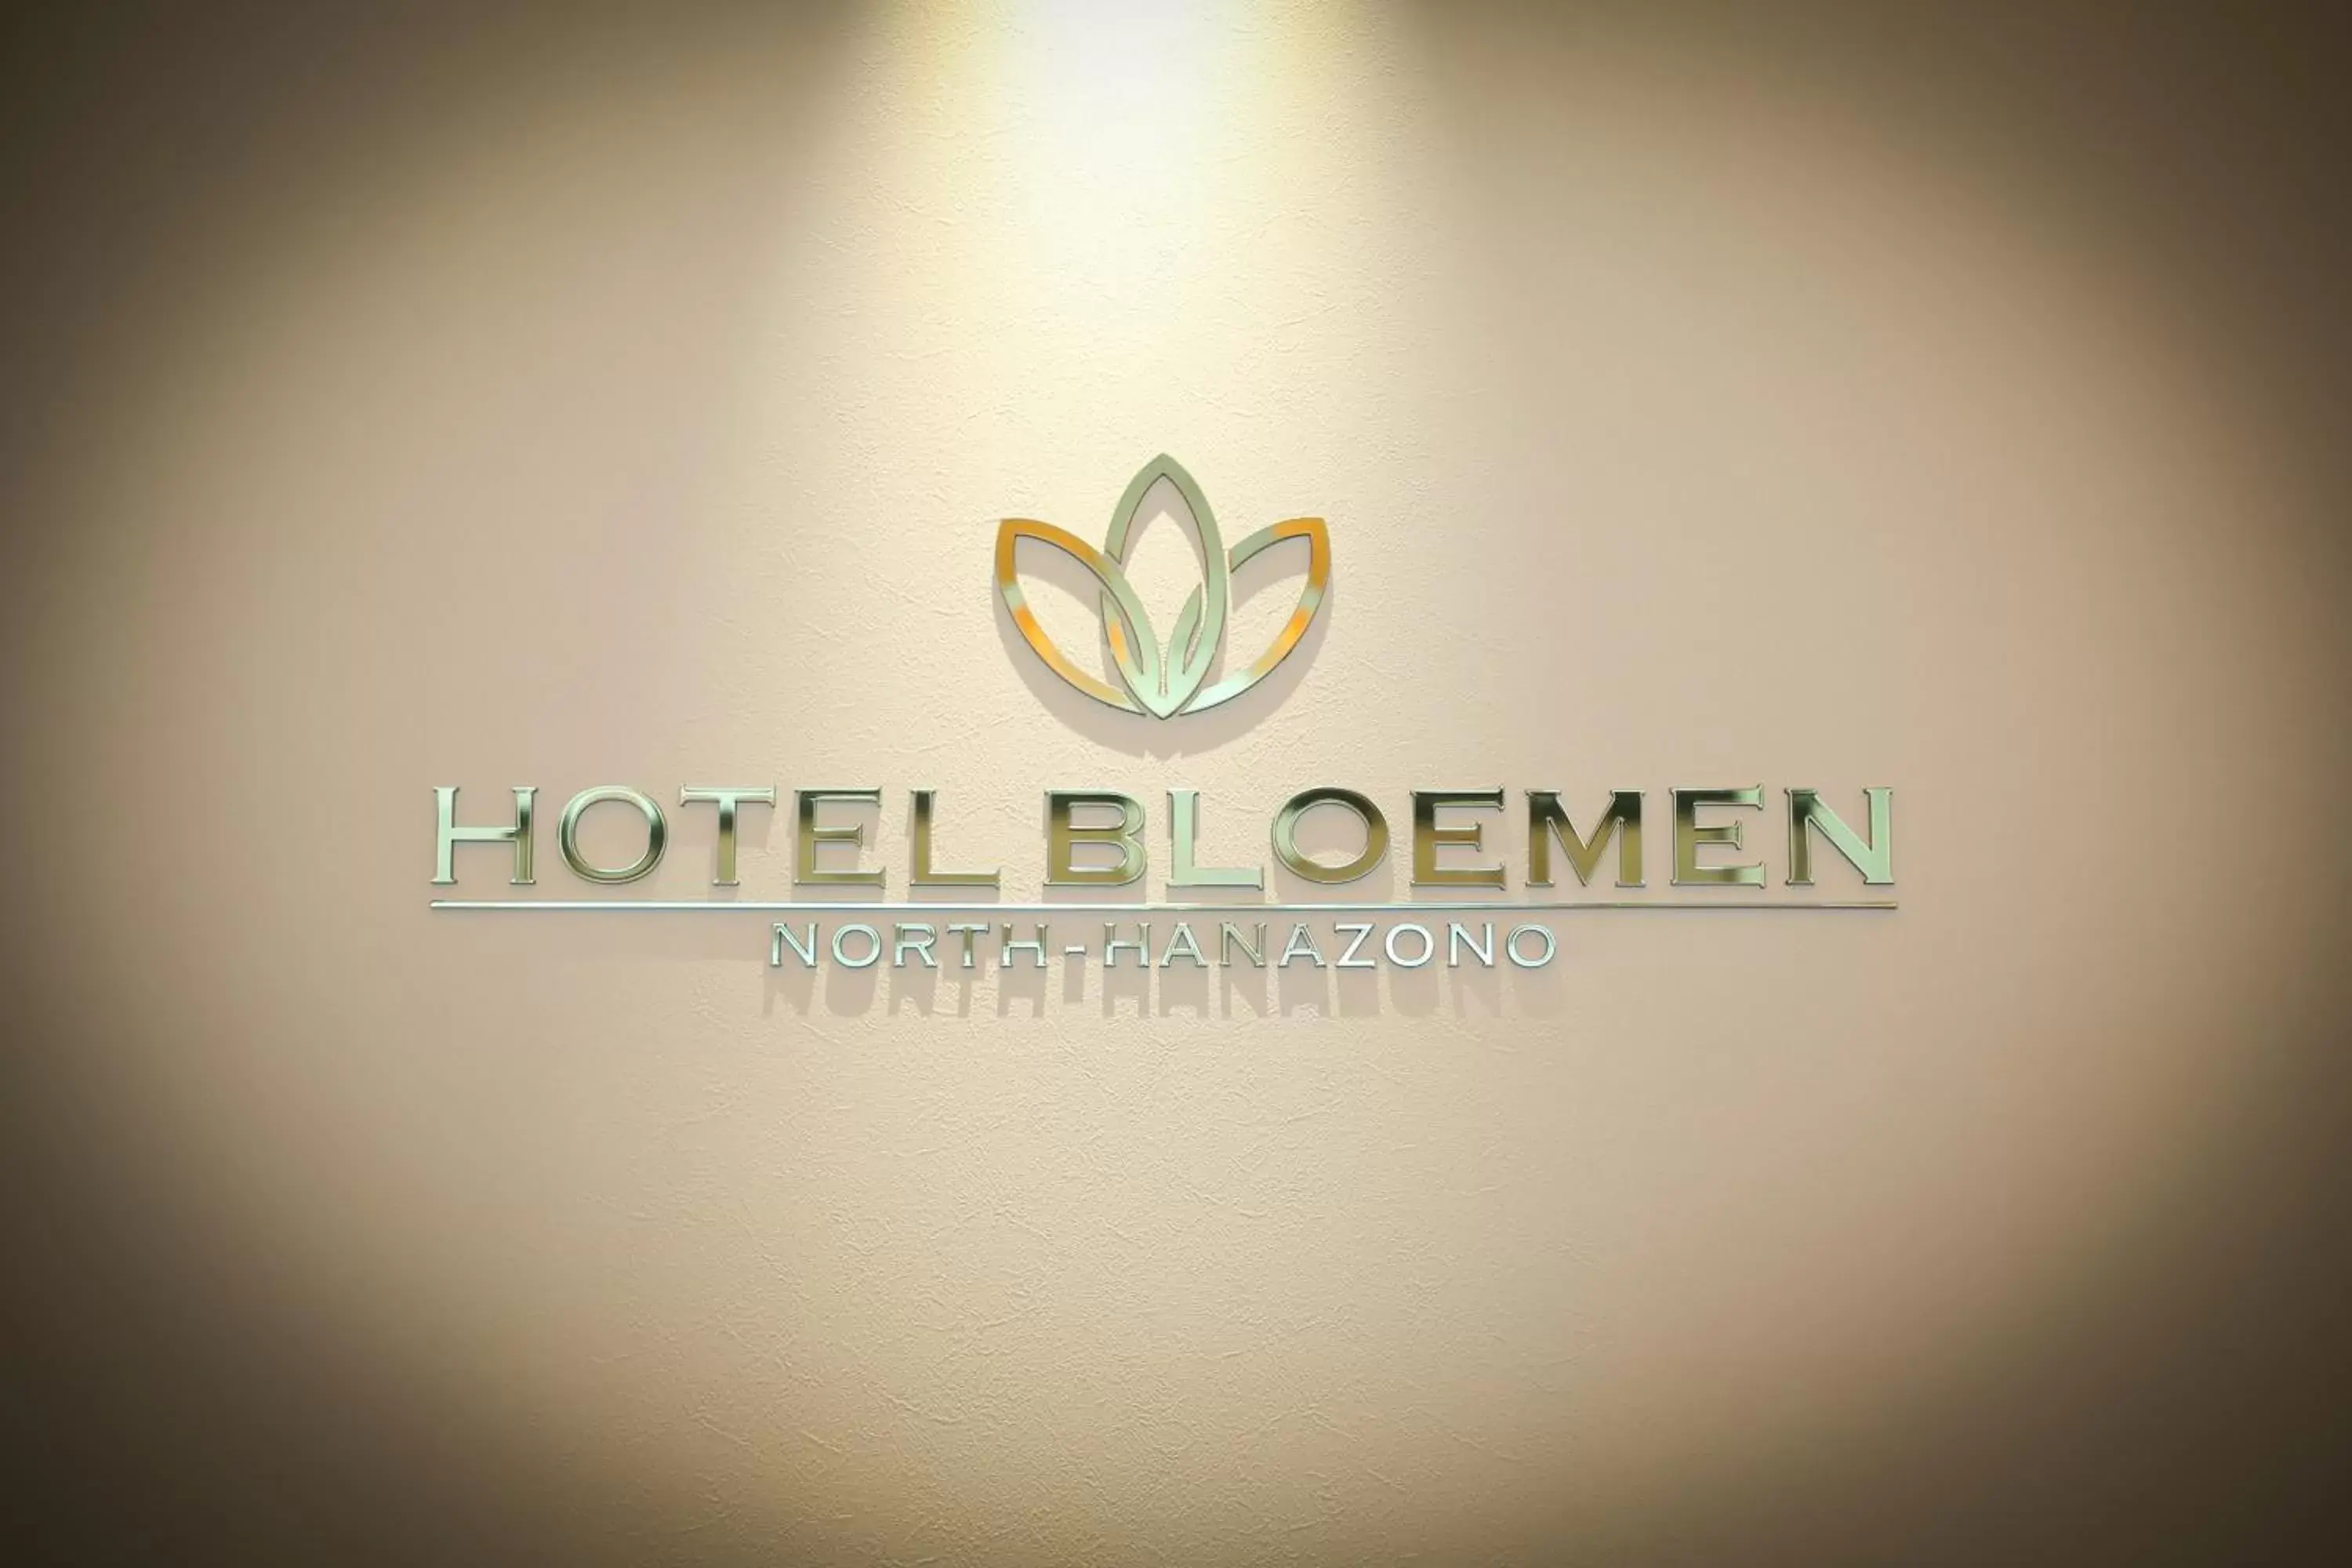 Property logo or sign, Property Logo/Sign in Hotel Bloemen North Hanazono